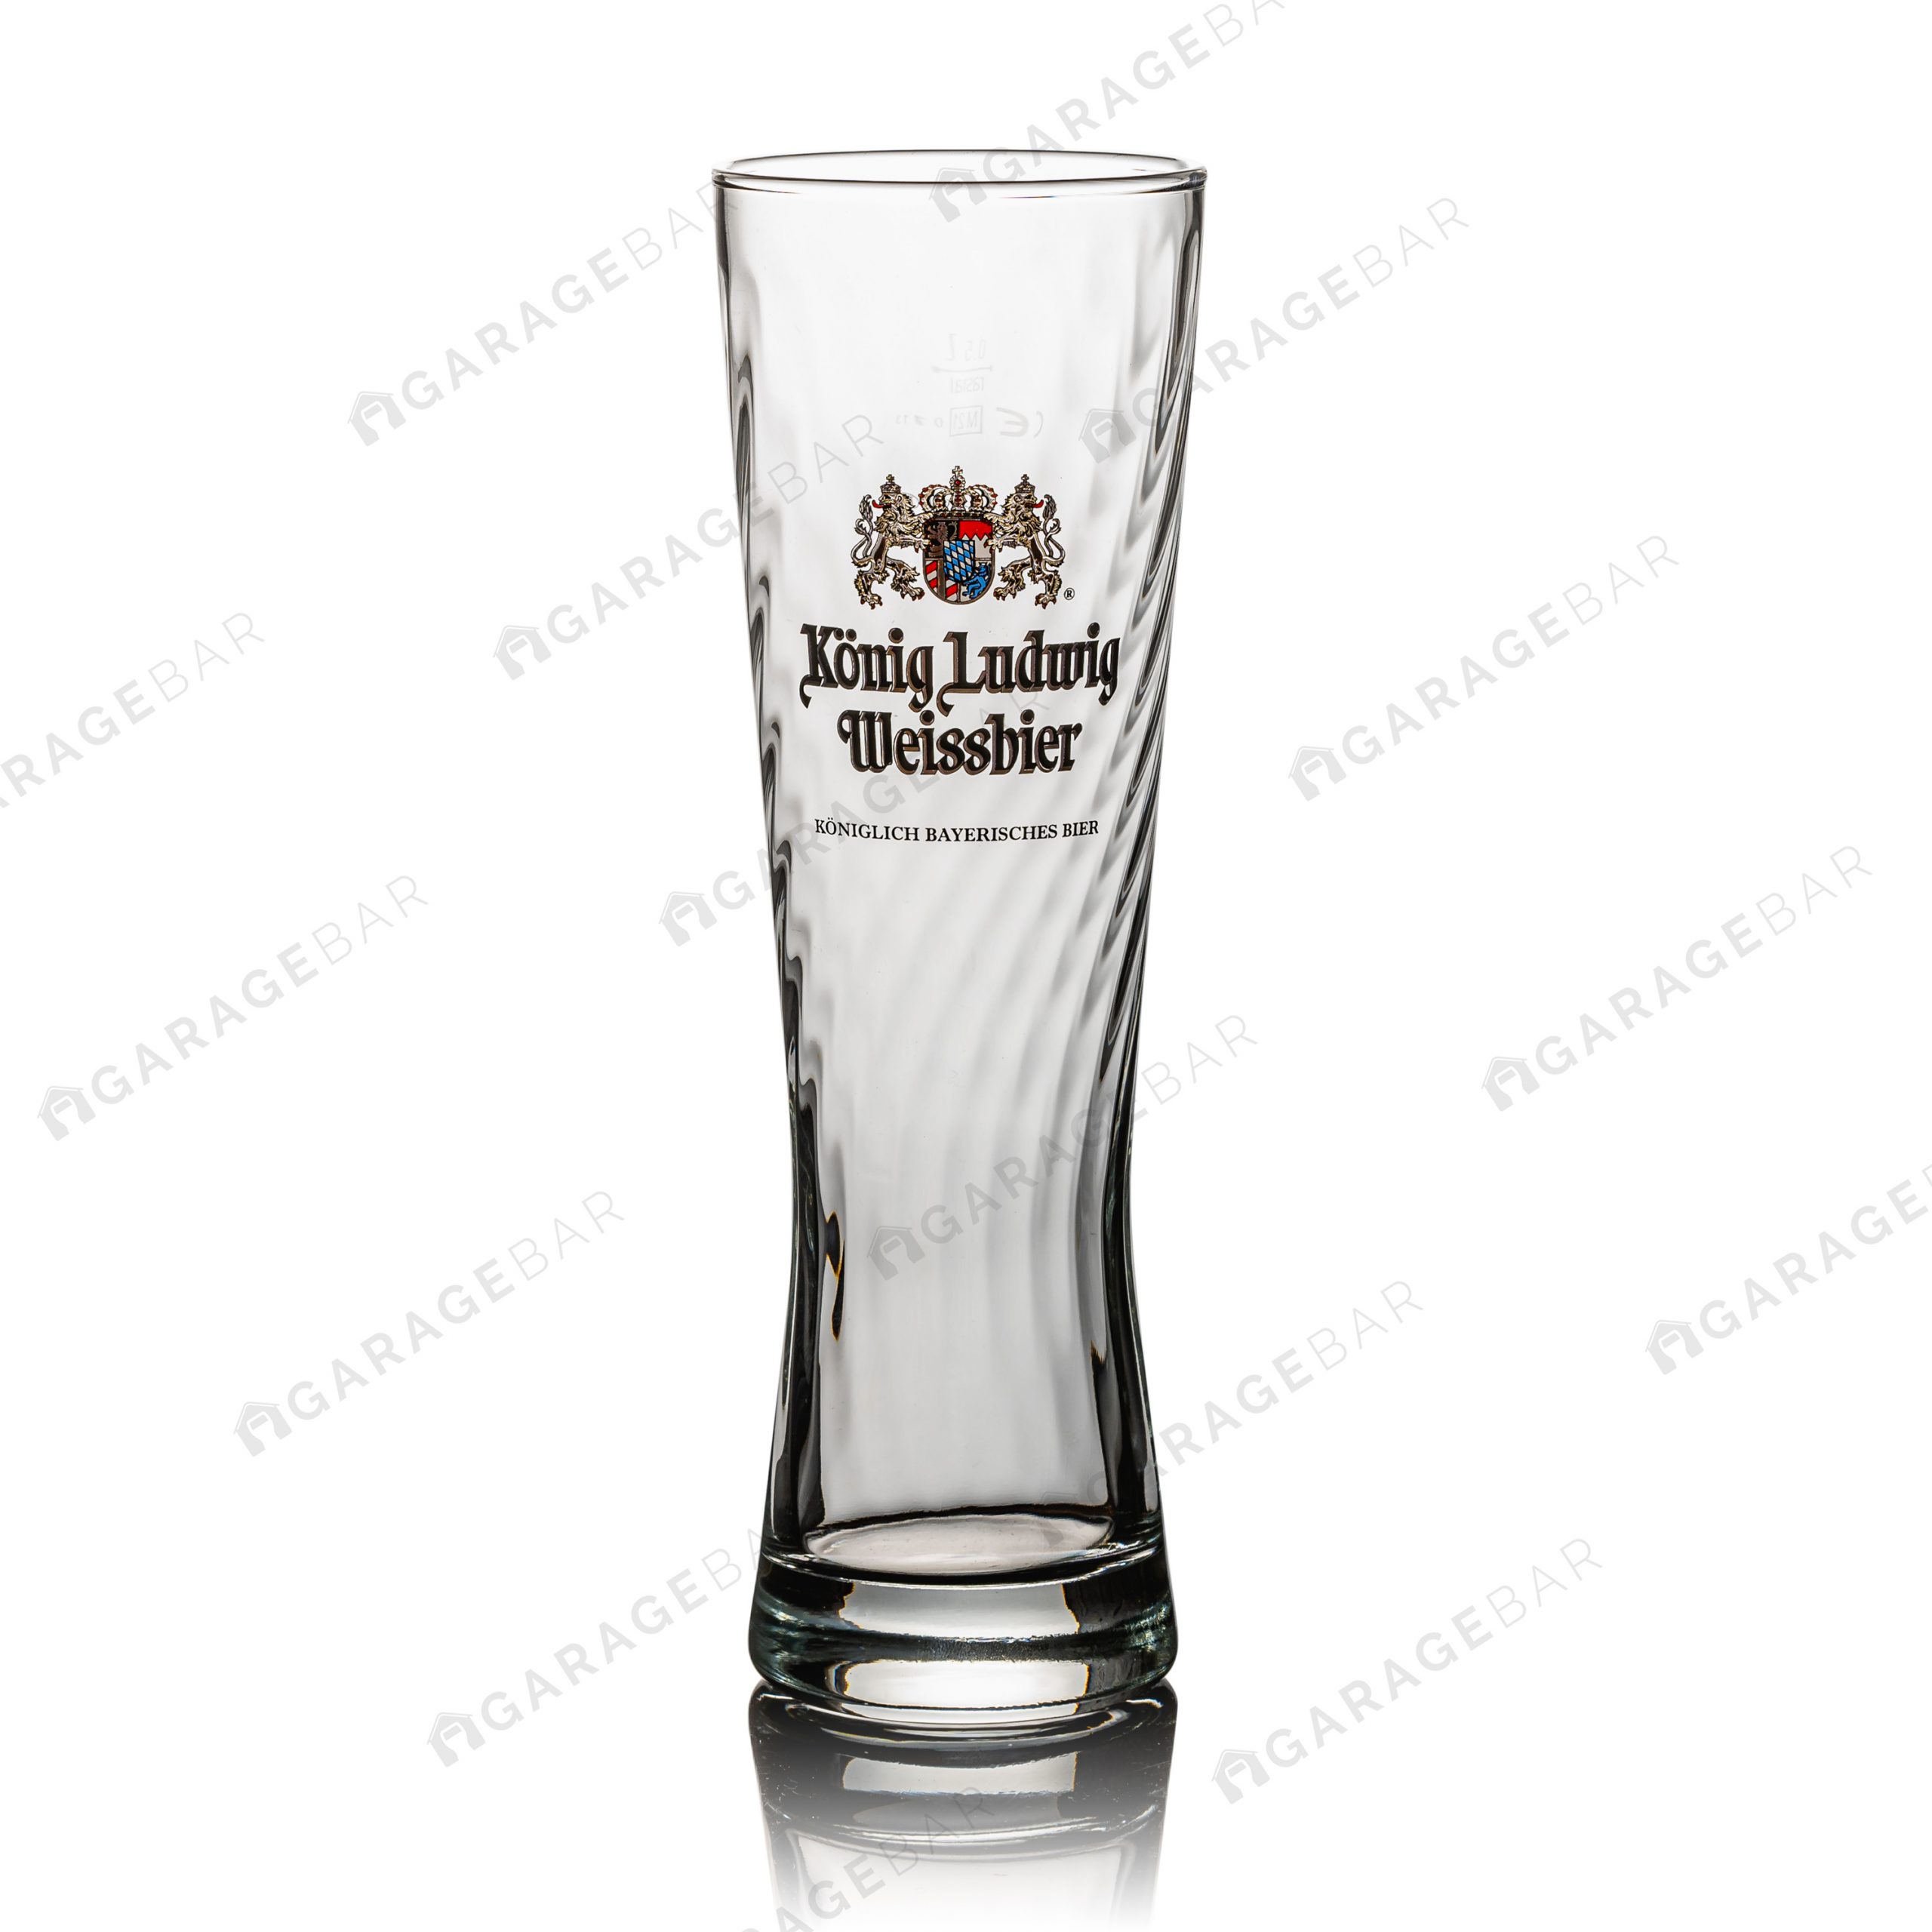 Konig Ludwig Pint Beer Glass